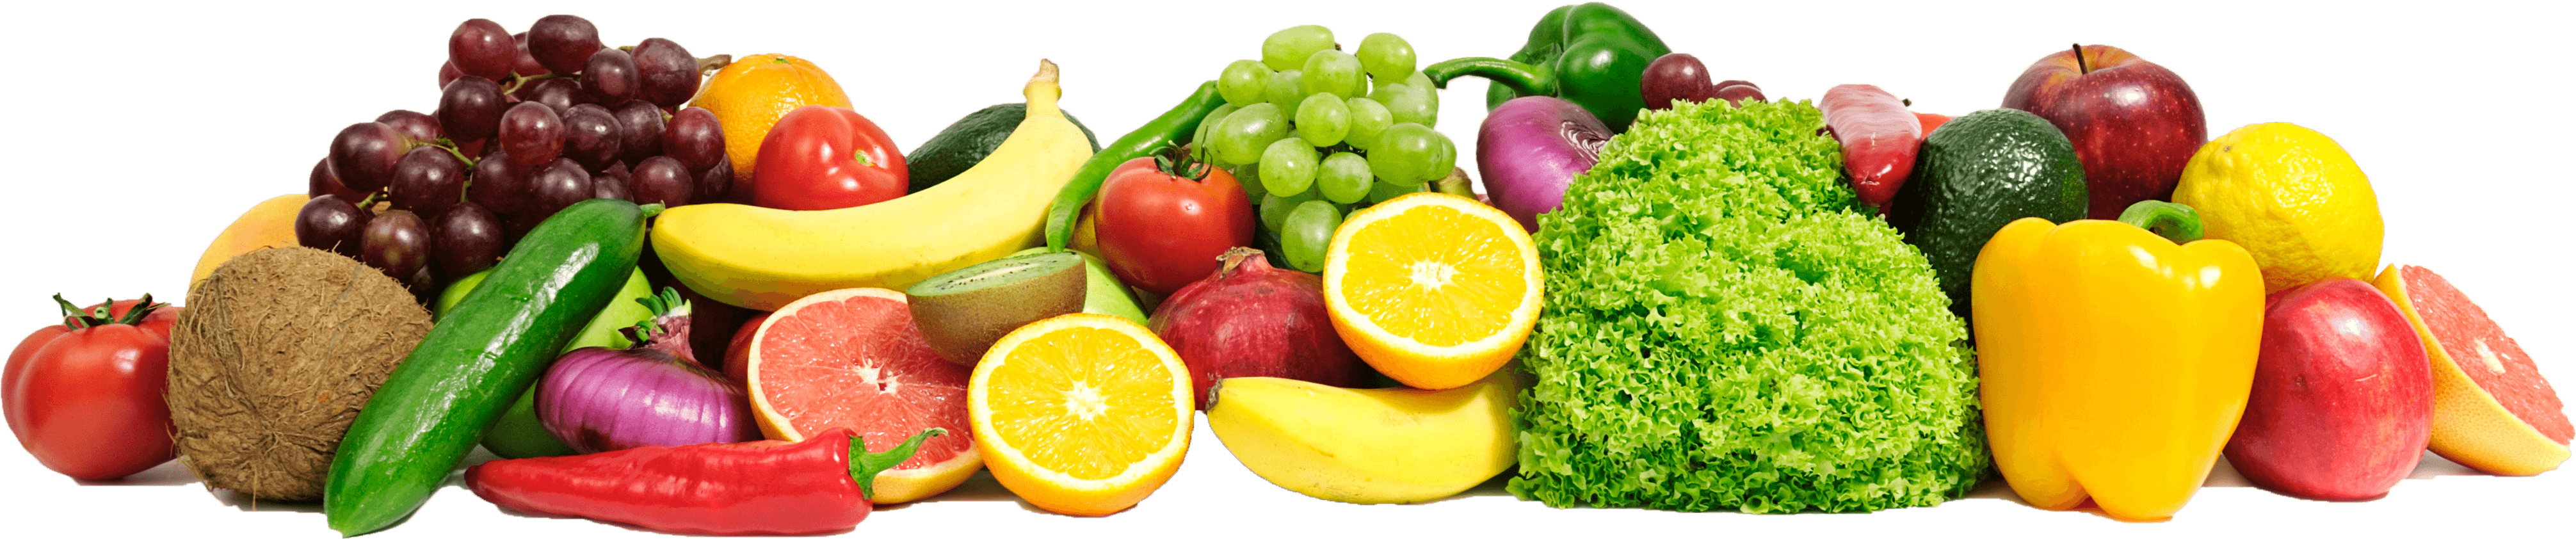 Frutas frescas y verduras Fondo transparente